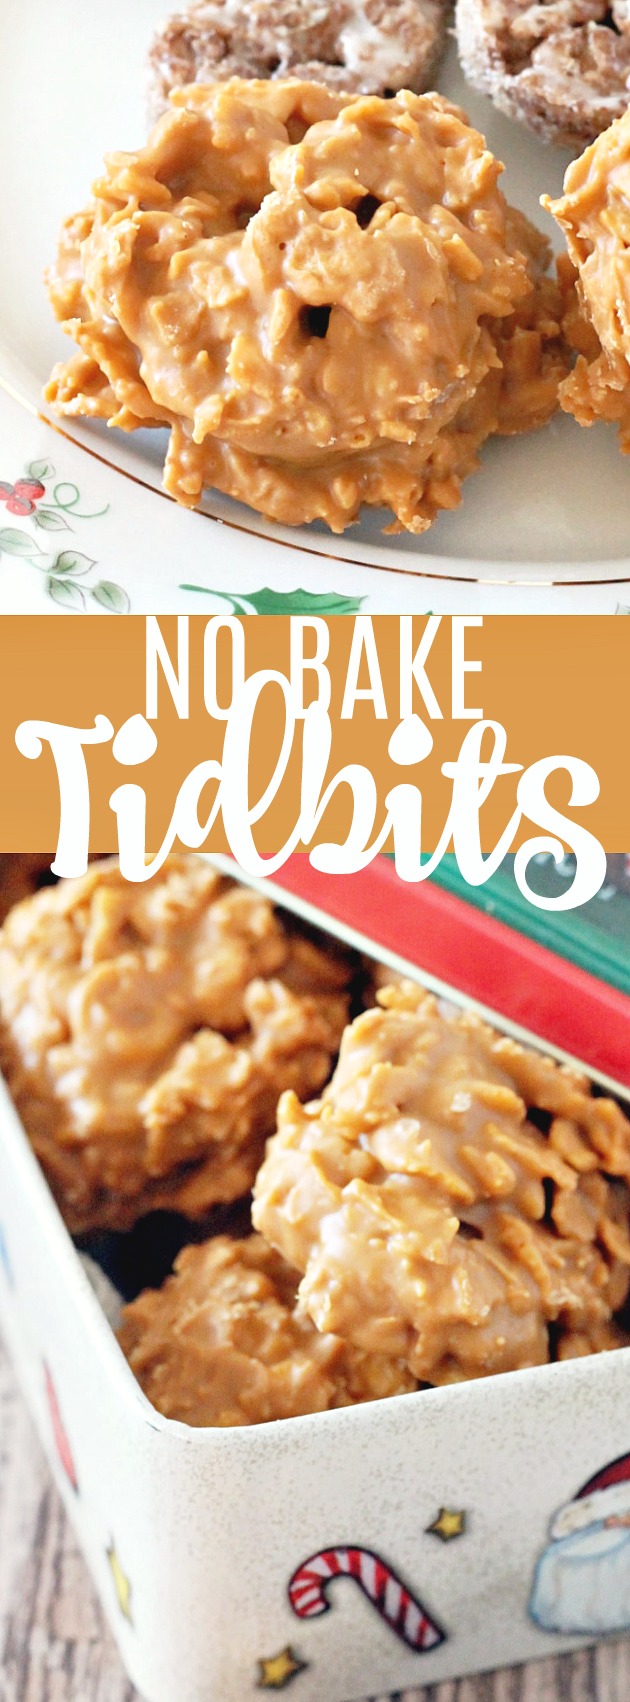 No Bake Tidbits